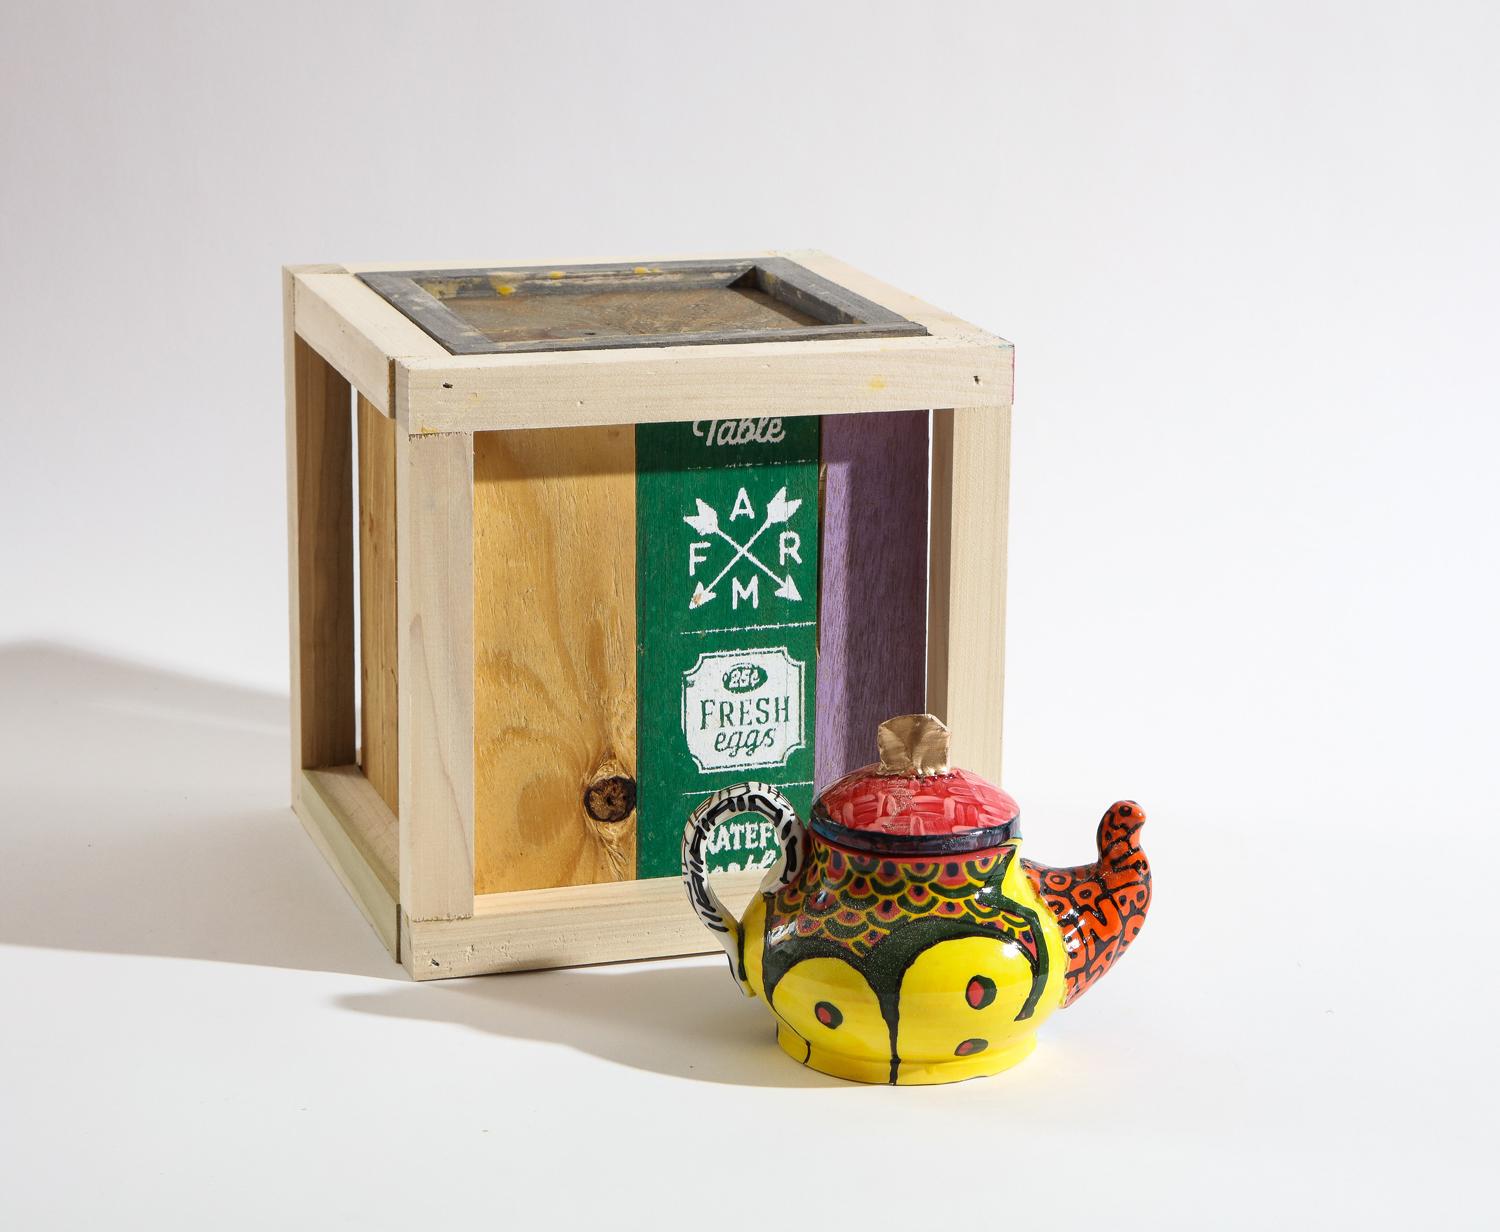 Roberto Lugo
Yayoi Kusama teapot and box set, 2021
Glazed porcelain, enamel paint, acrylic paint and wood
Measures: Teapot: 5.25 x 7 x 5 in
Box: 10 x 10 x 10 in.